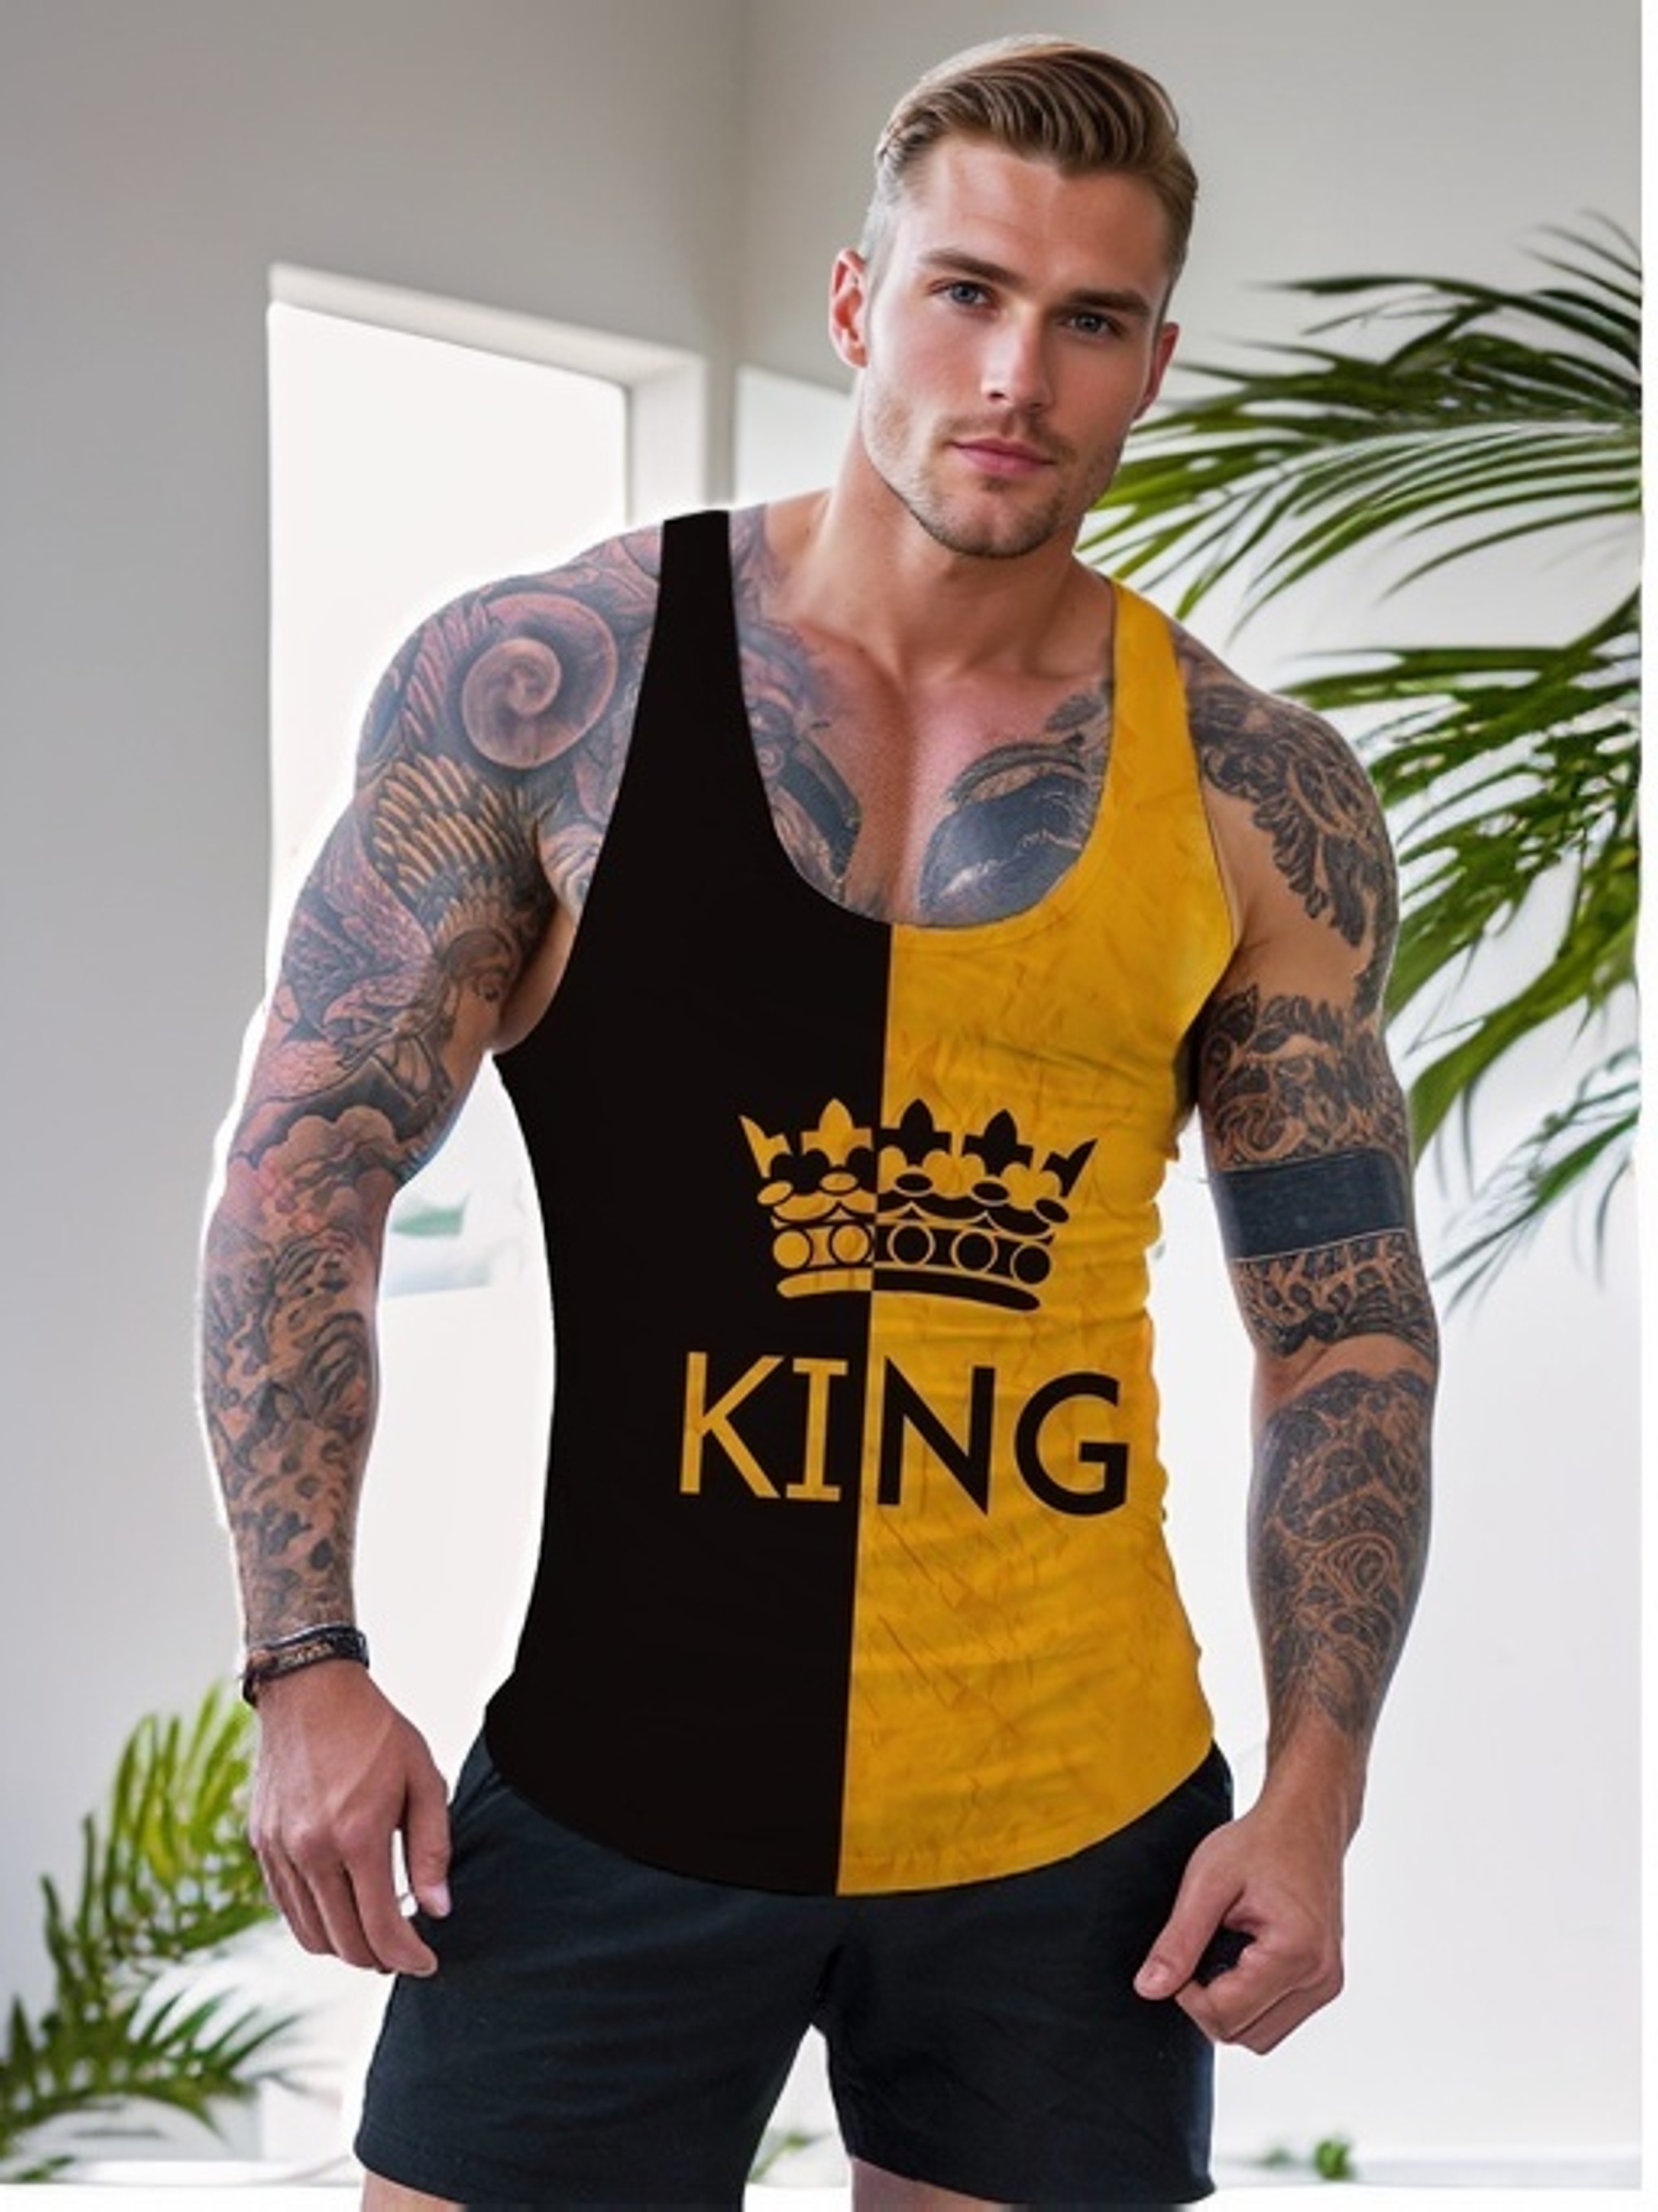 Gym King Established Relaxed Jogger - Black/White – GYM KING